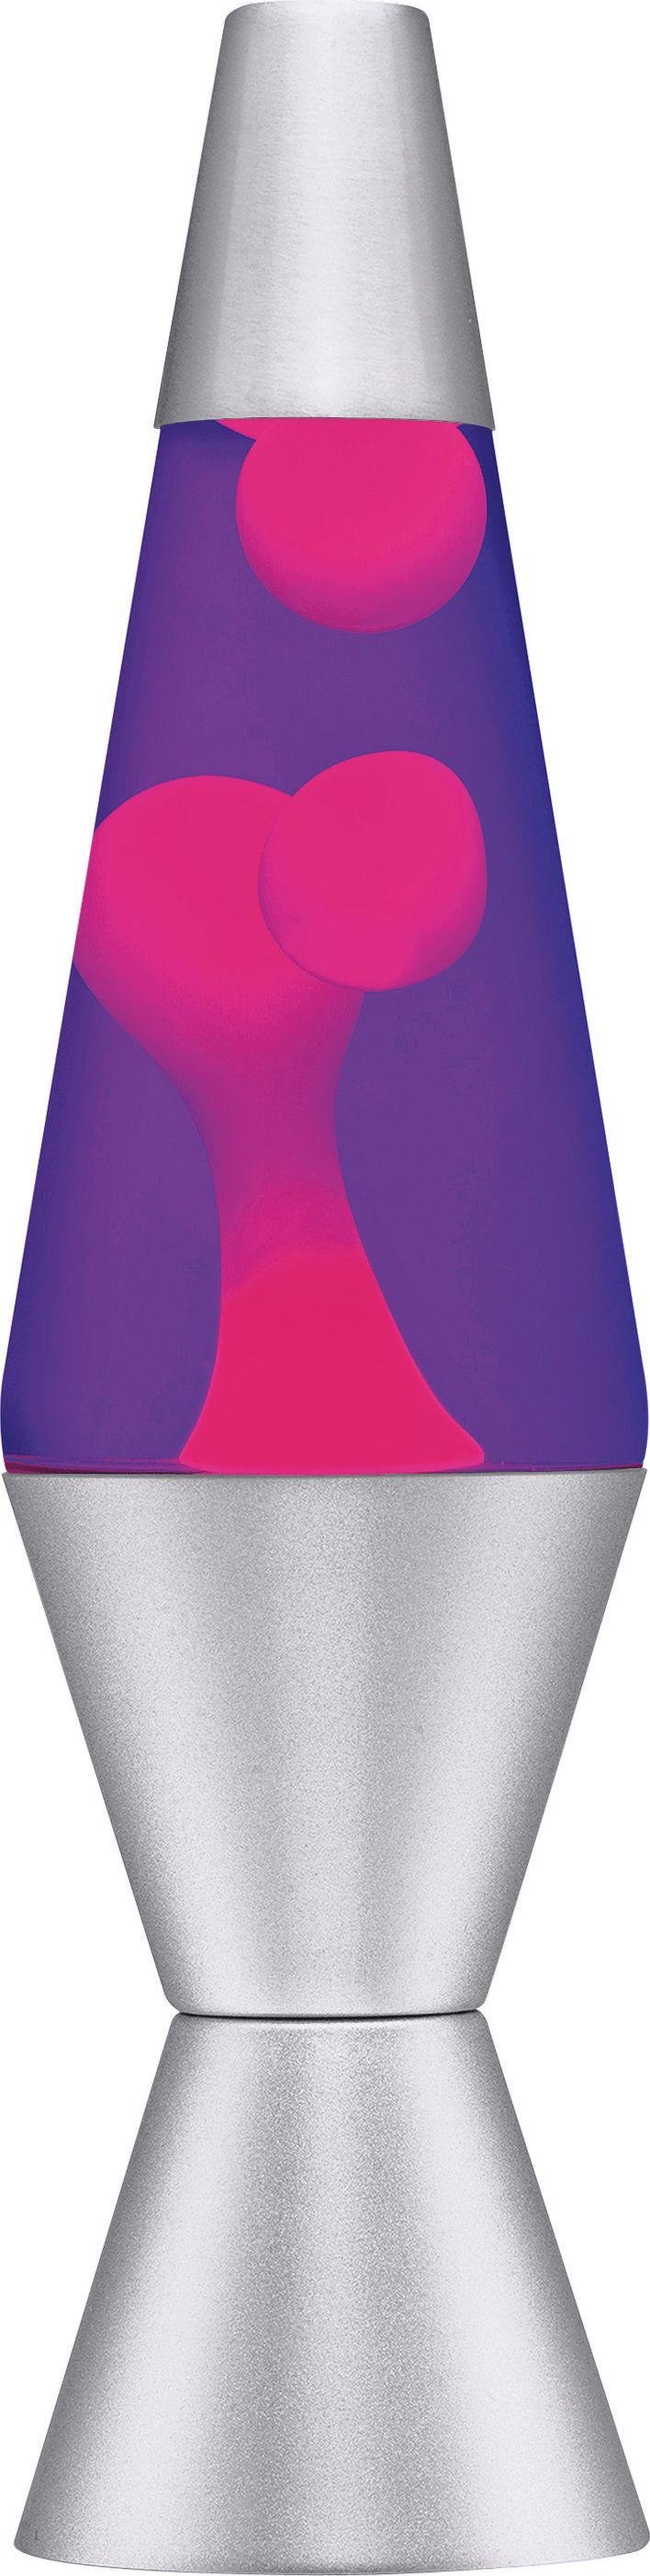 Lava Lite Classic Lava Lamp - Pink & Purple